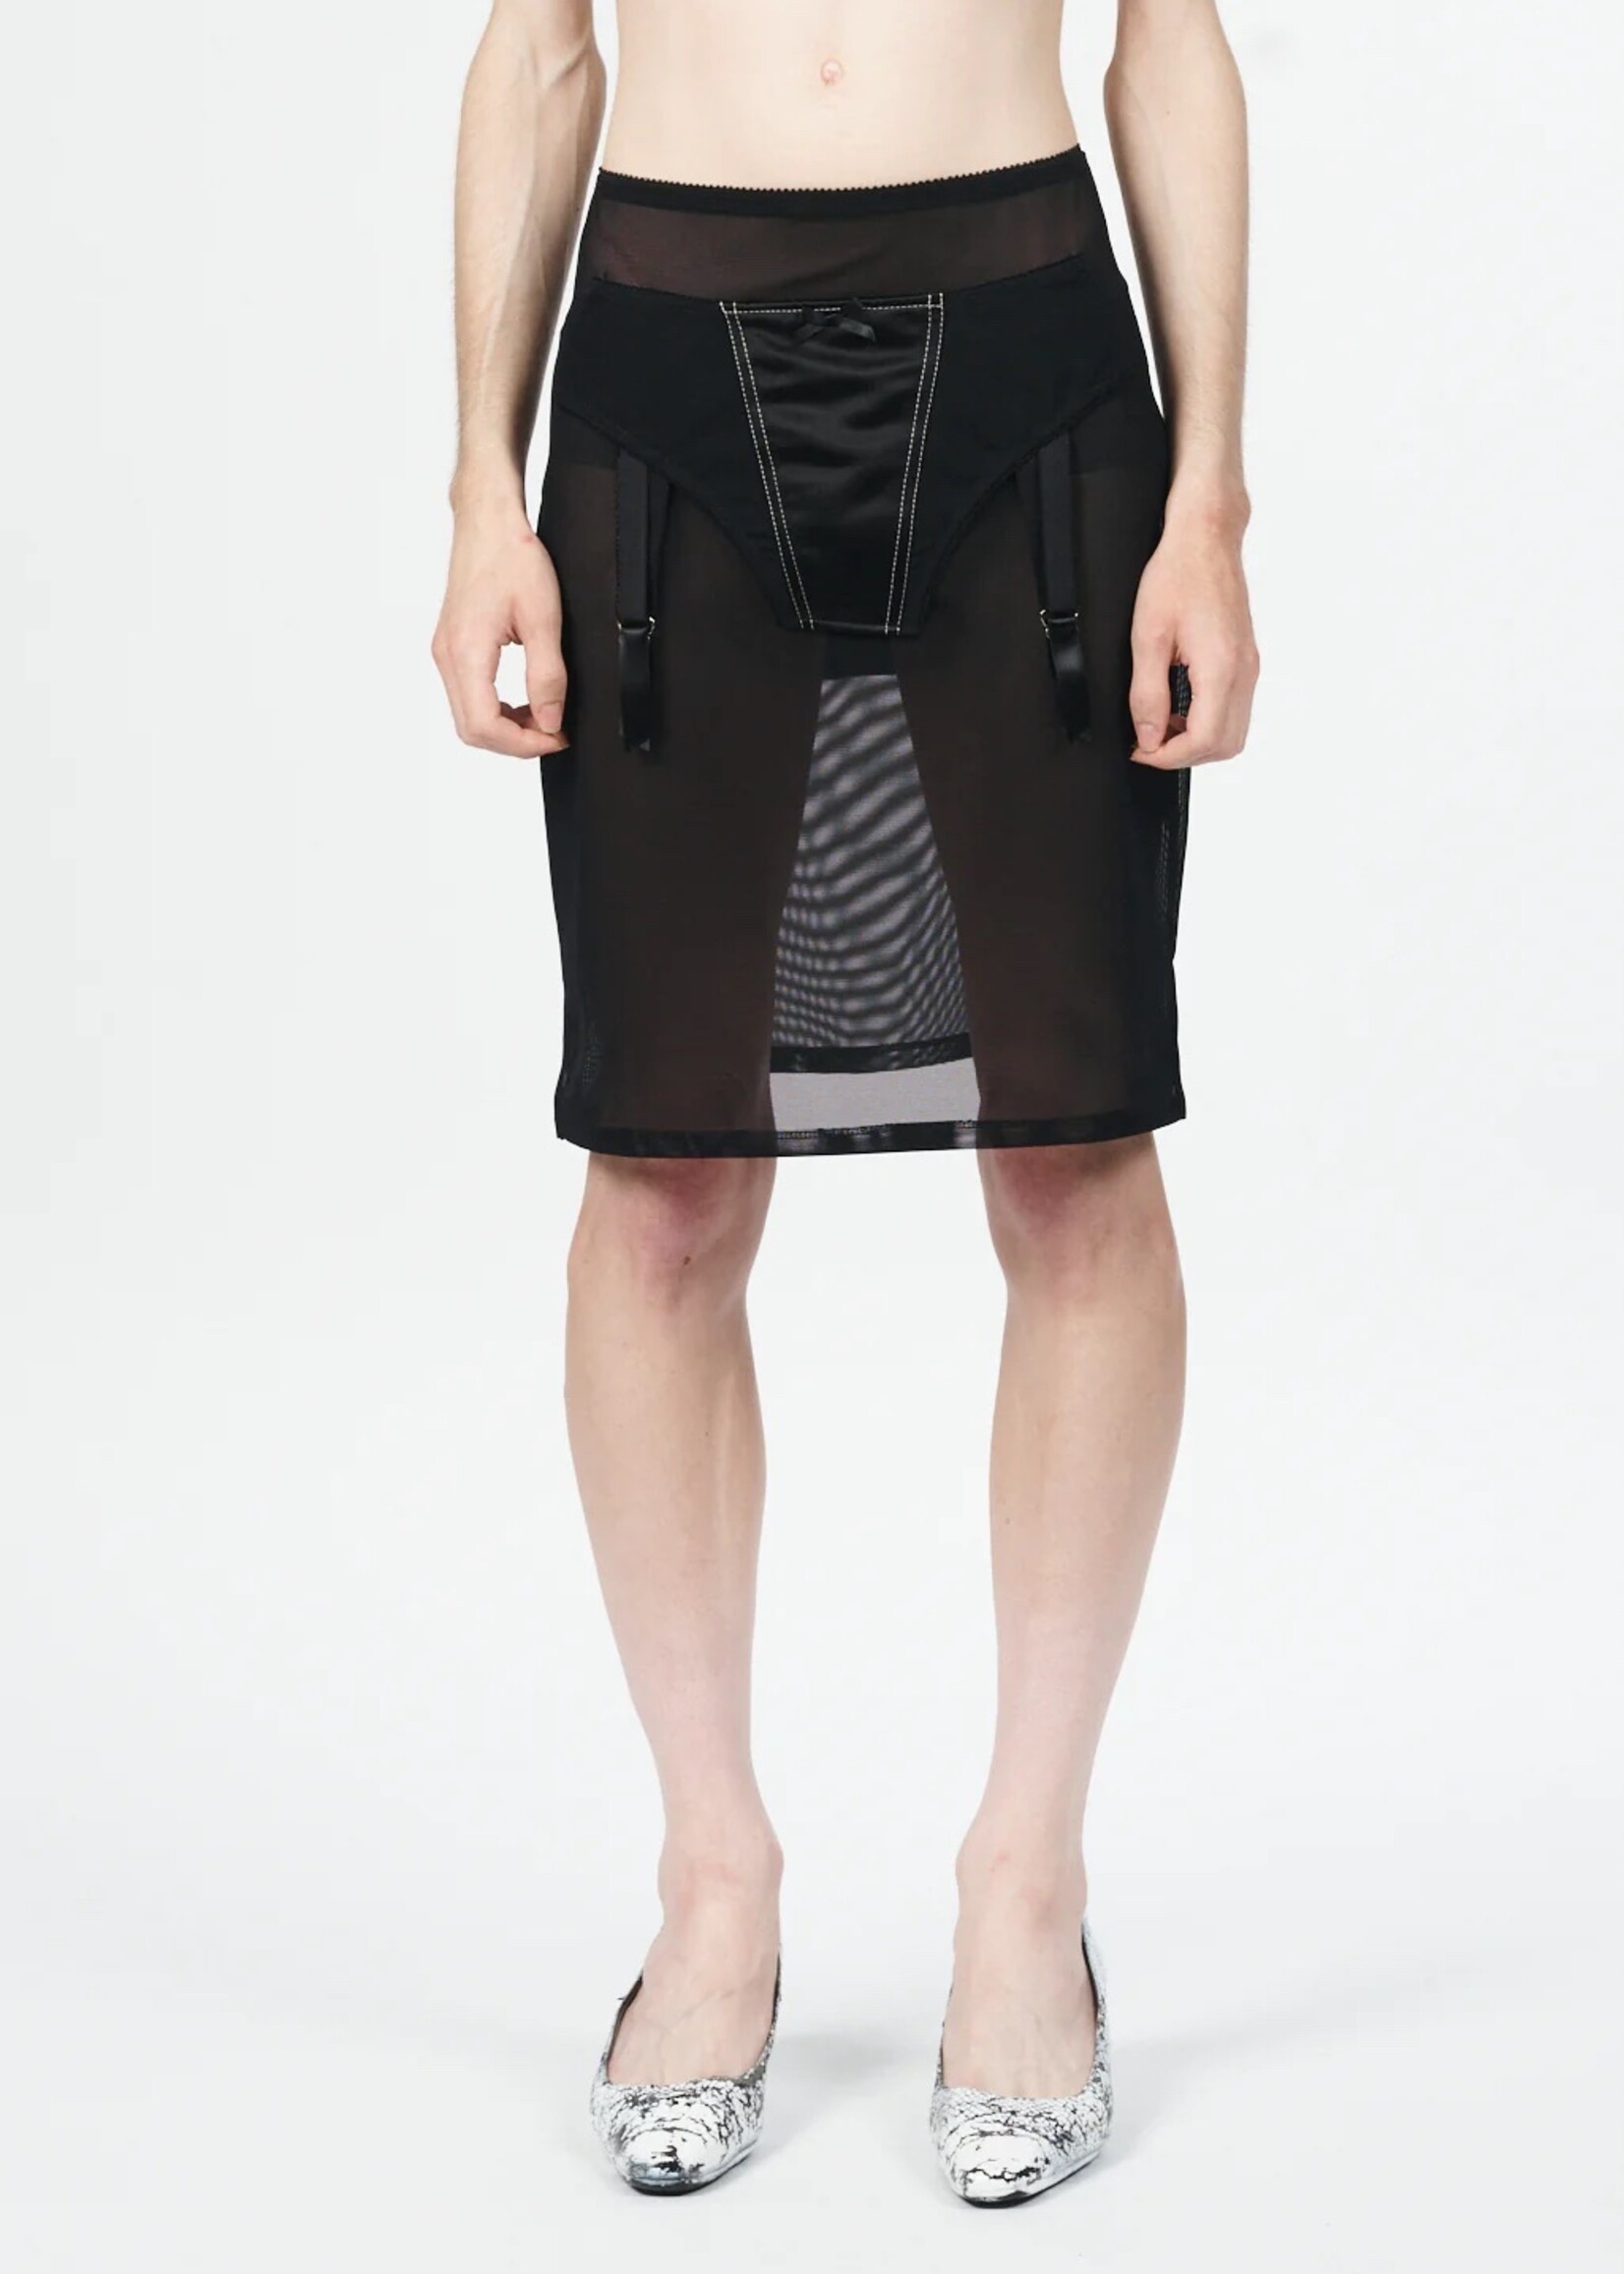 https://cdn.shoplightspeed.com/shops/615307/files/58677385/1652x2313x1/vaquera-underwear-mesh-skirt-in-black.jpg